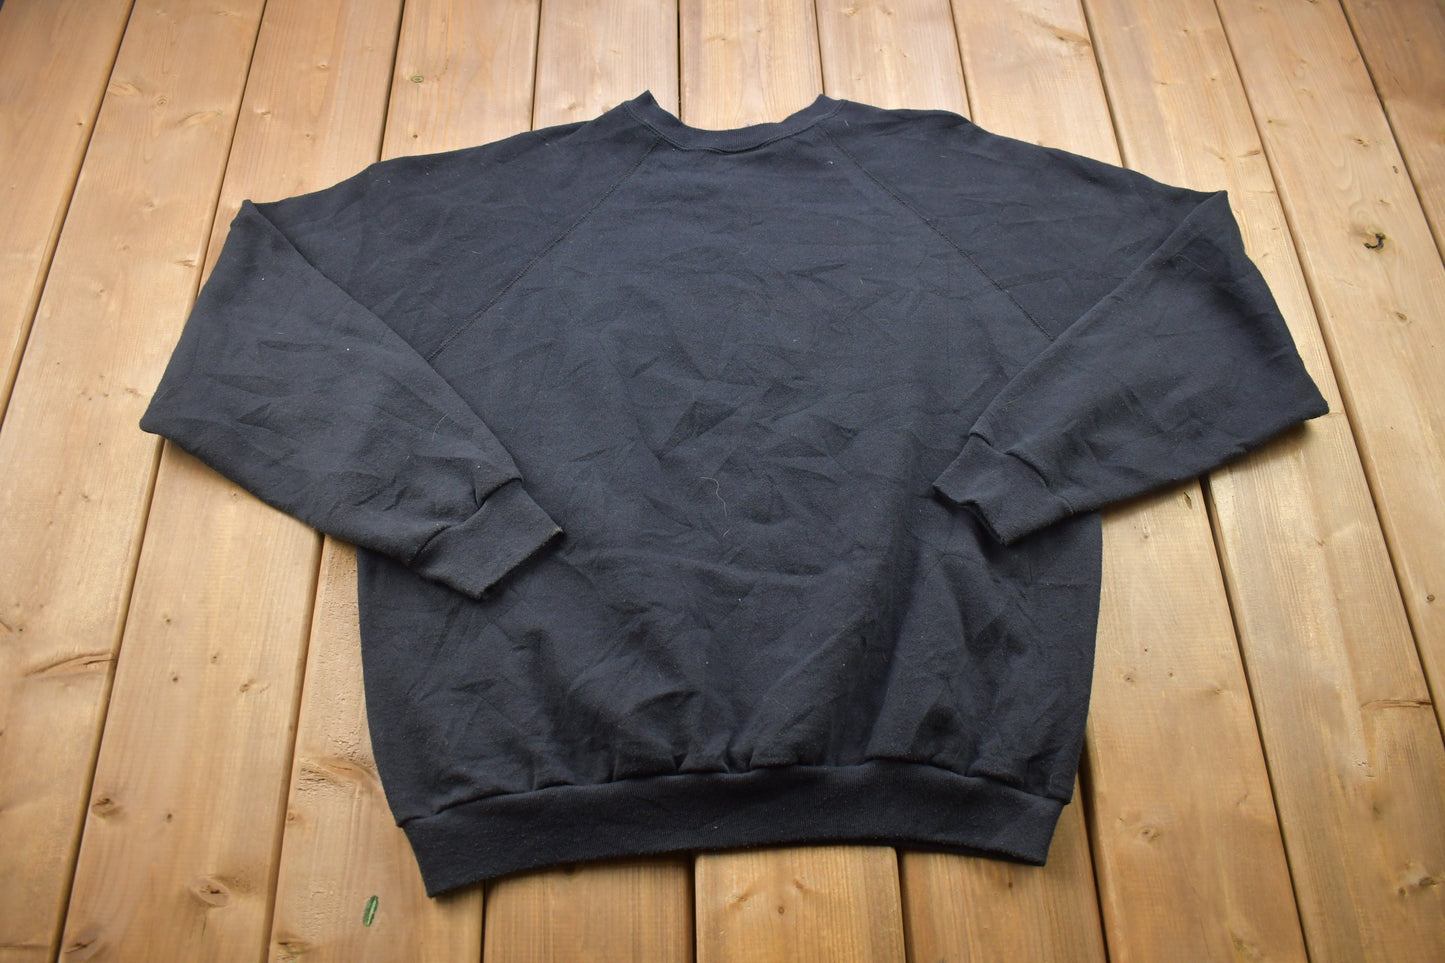 Vintage 1990s Tultex Blank Raglan Crewneck Sweatshirt / Made in USA / 90s Crewneck / Basic Hoodie / Athleisure / Streetwear